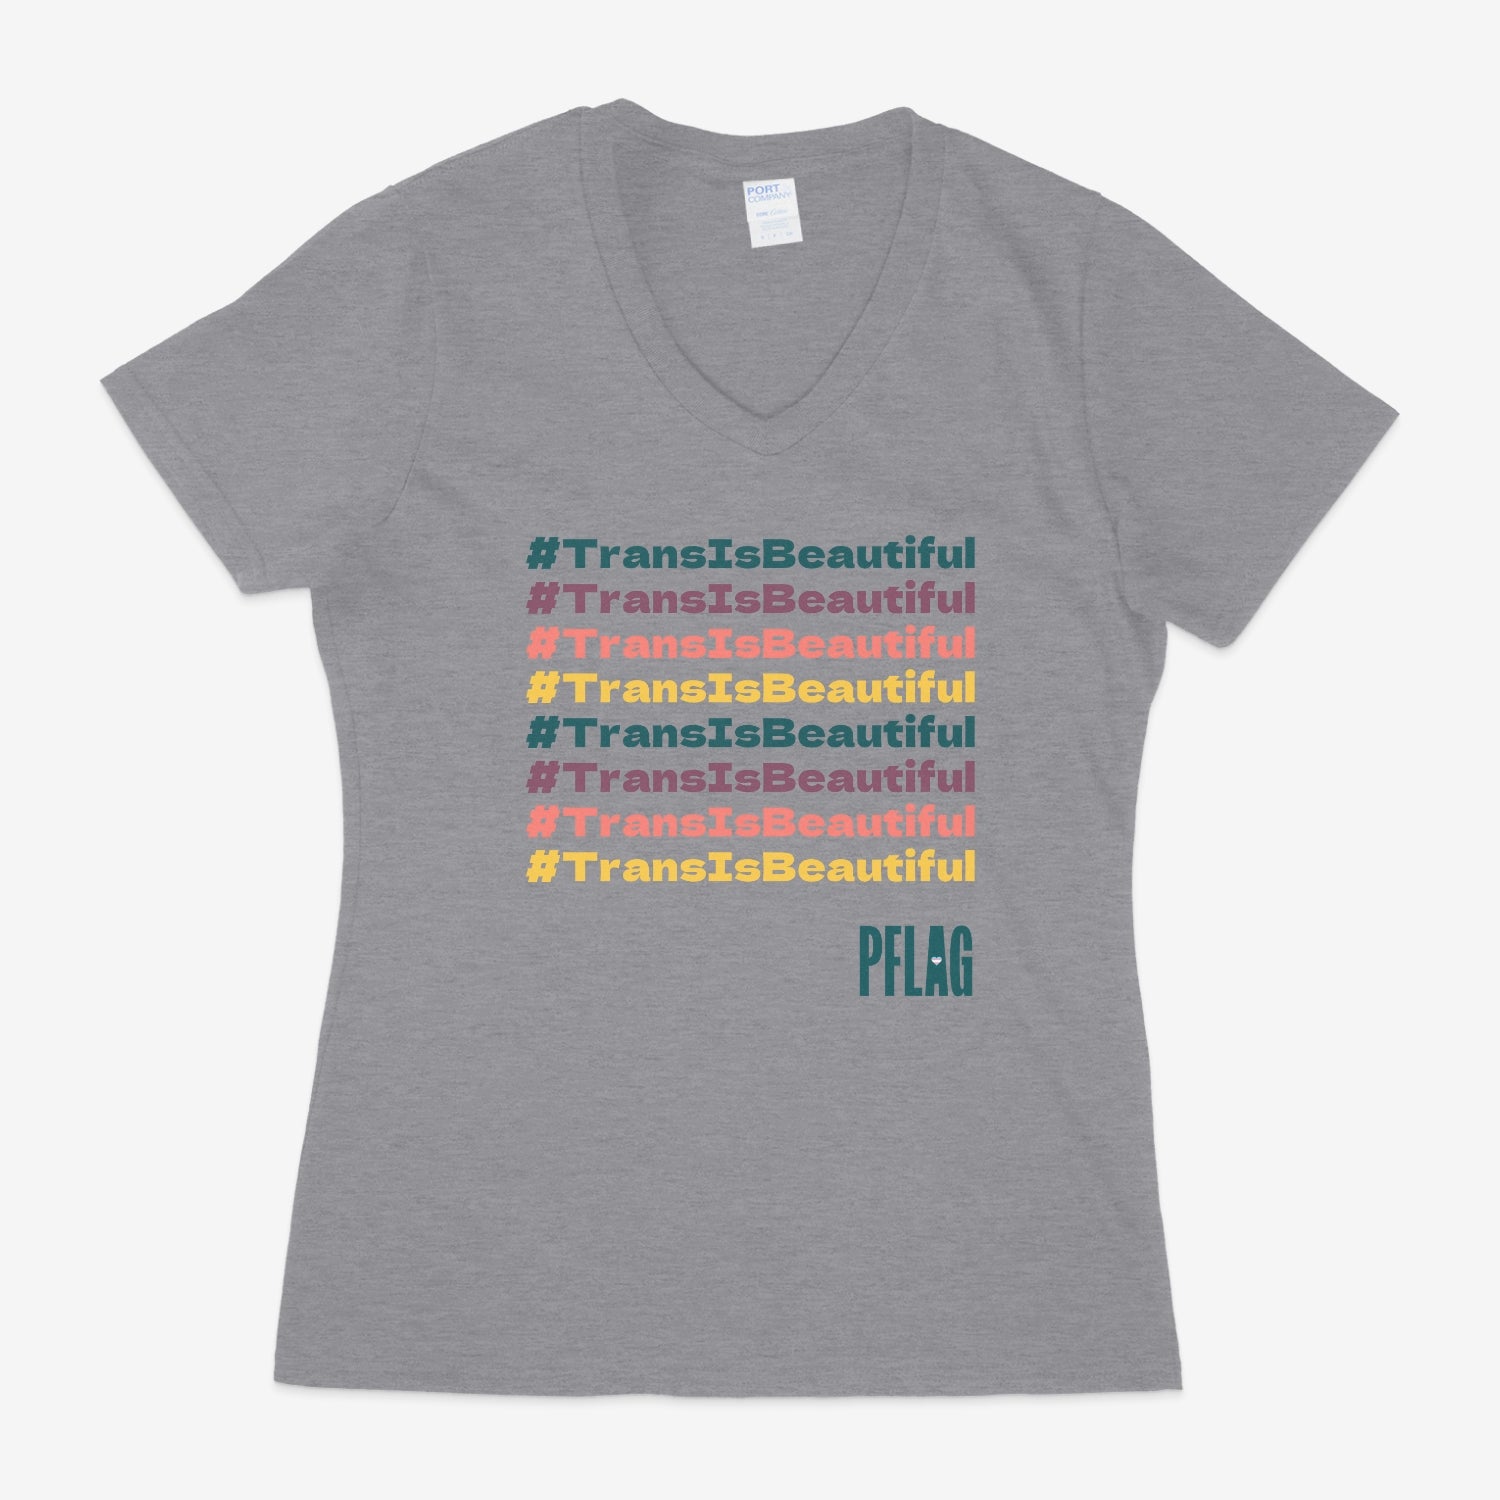 #TransIsBeautiful - Fitted-Cut V-Neck Short Sleeve T-Shirt